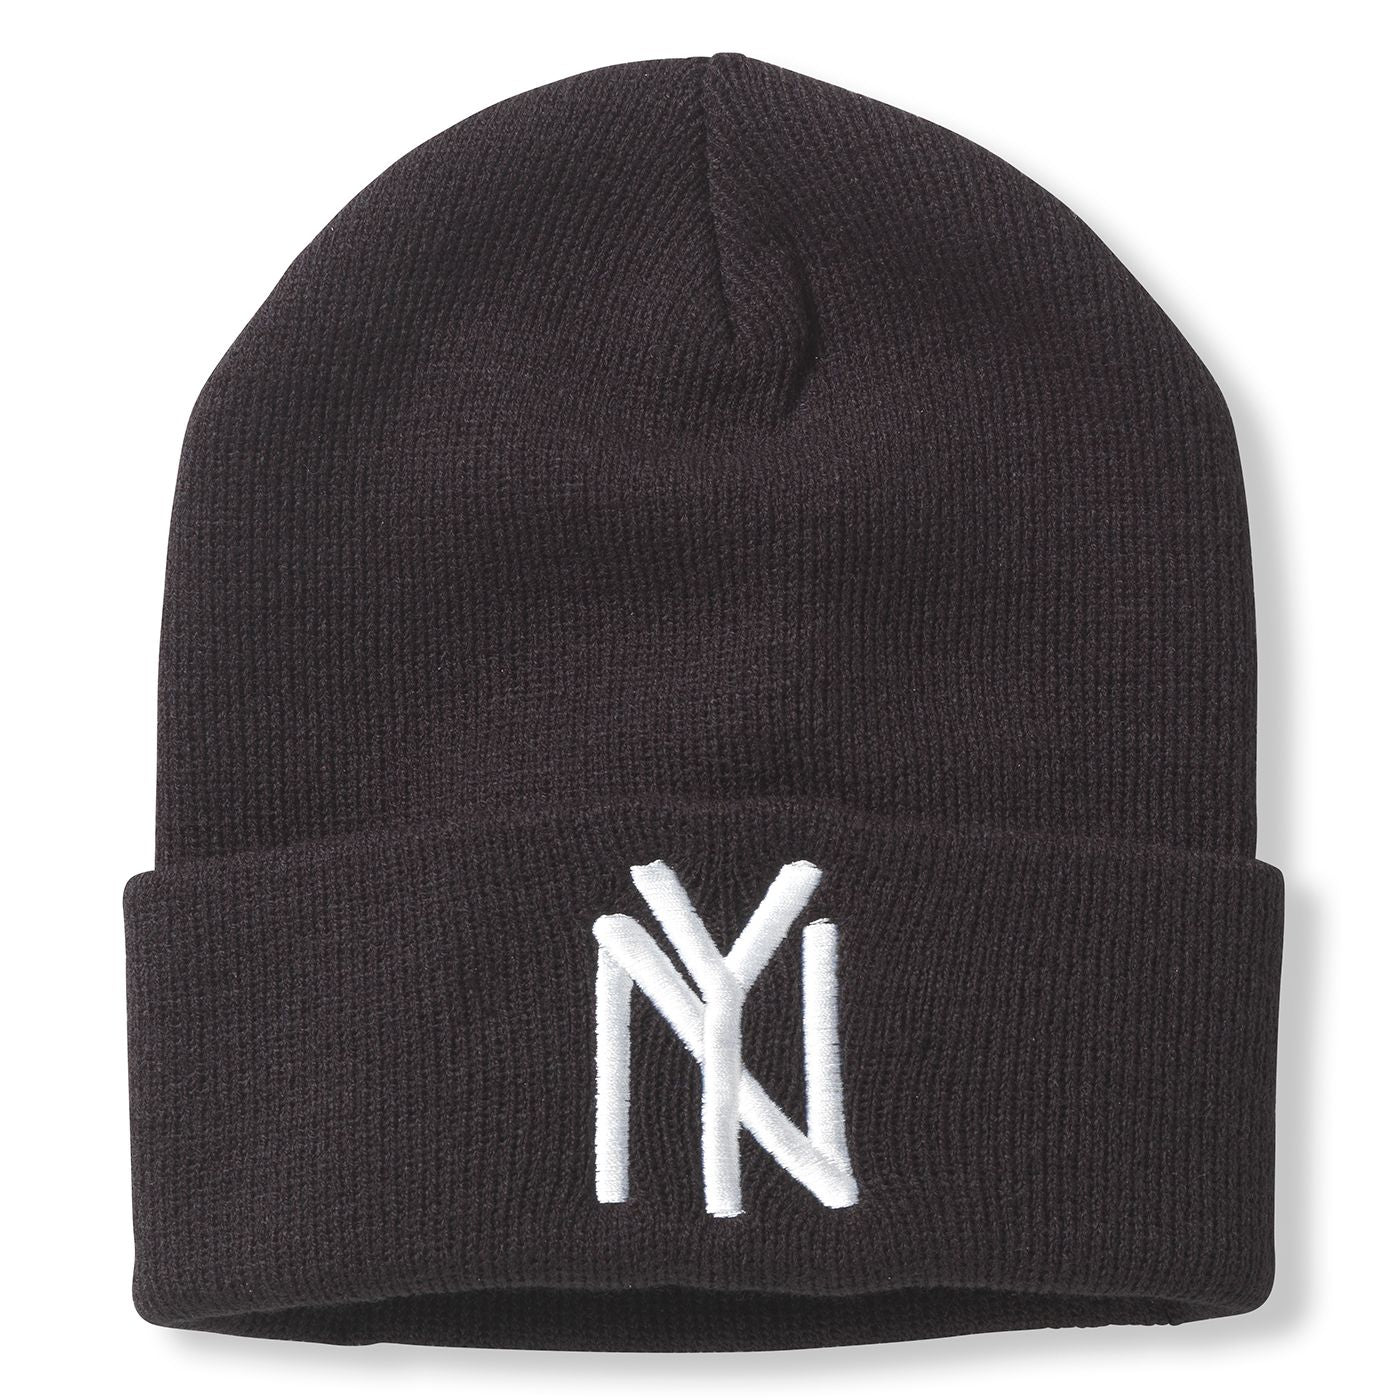 NY Black Yankees Cuffed Knit Beanie